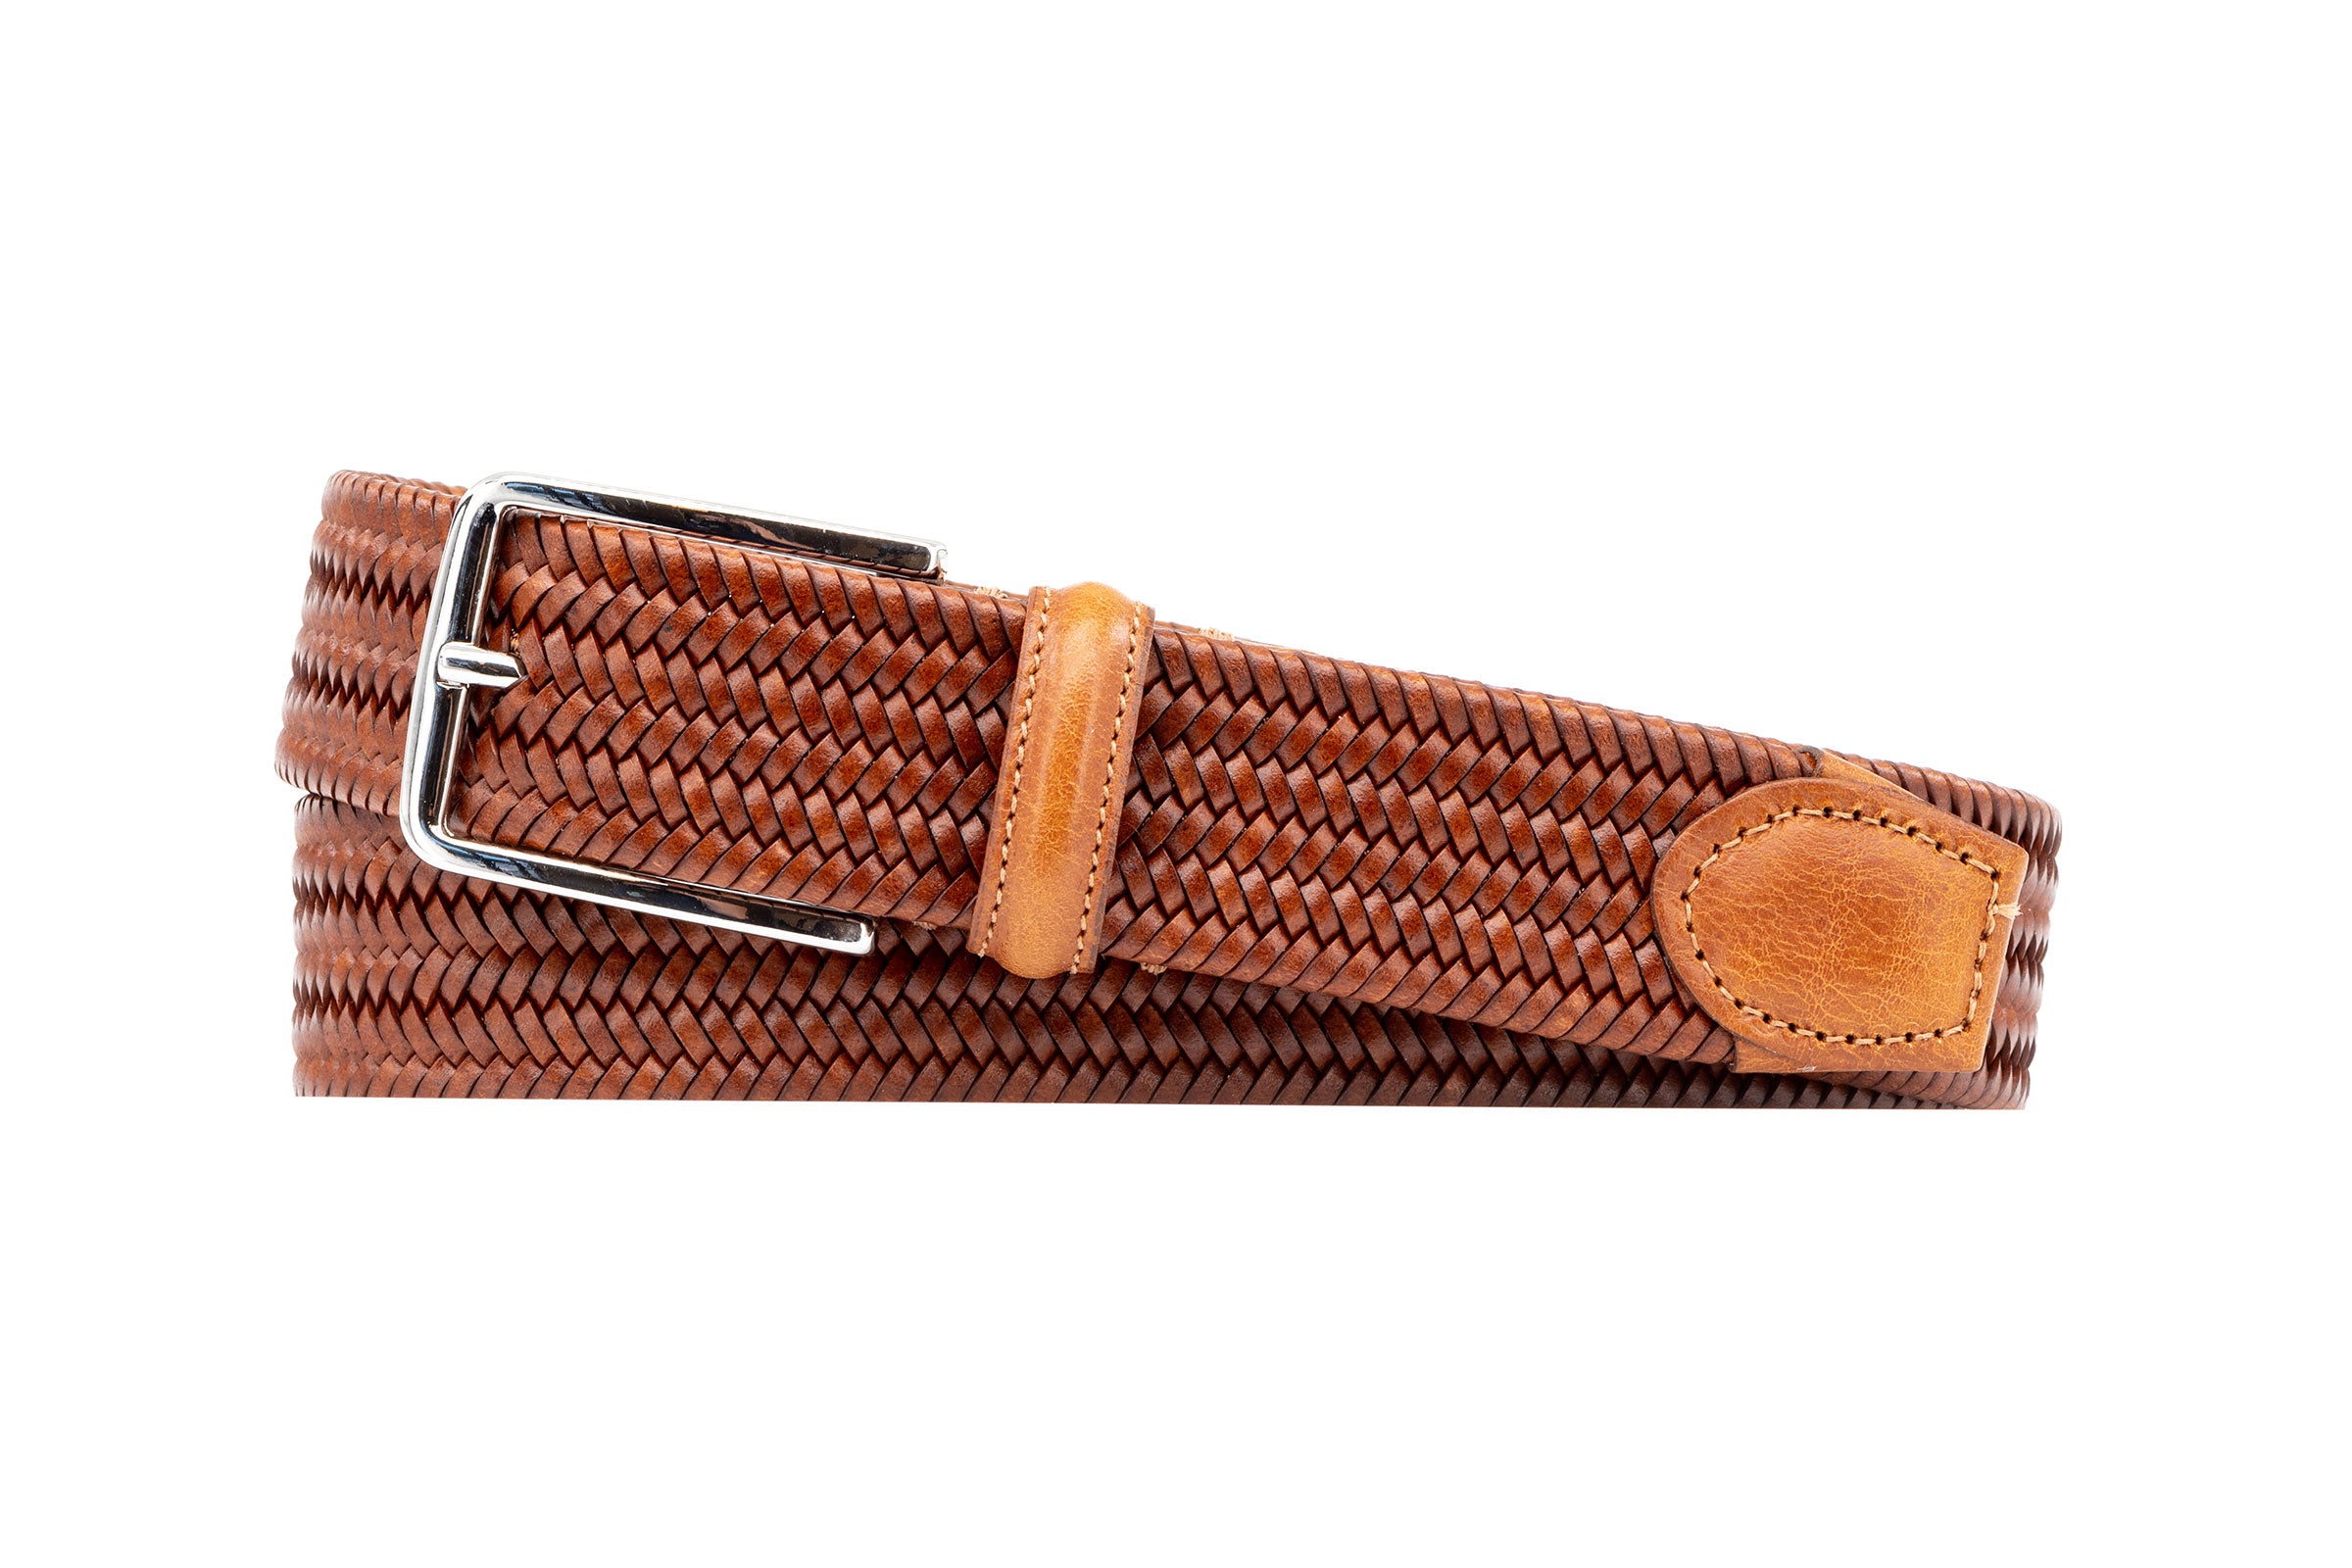 Braided Stretch Leather Belt by Martin Dingman